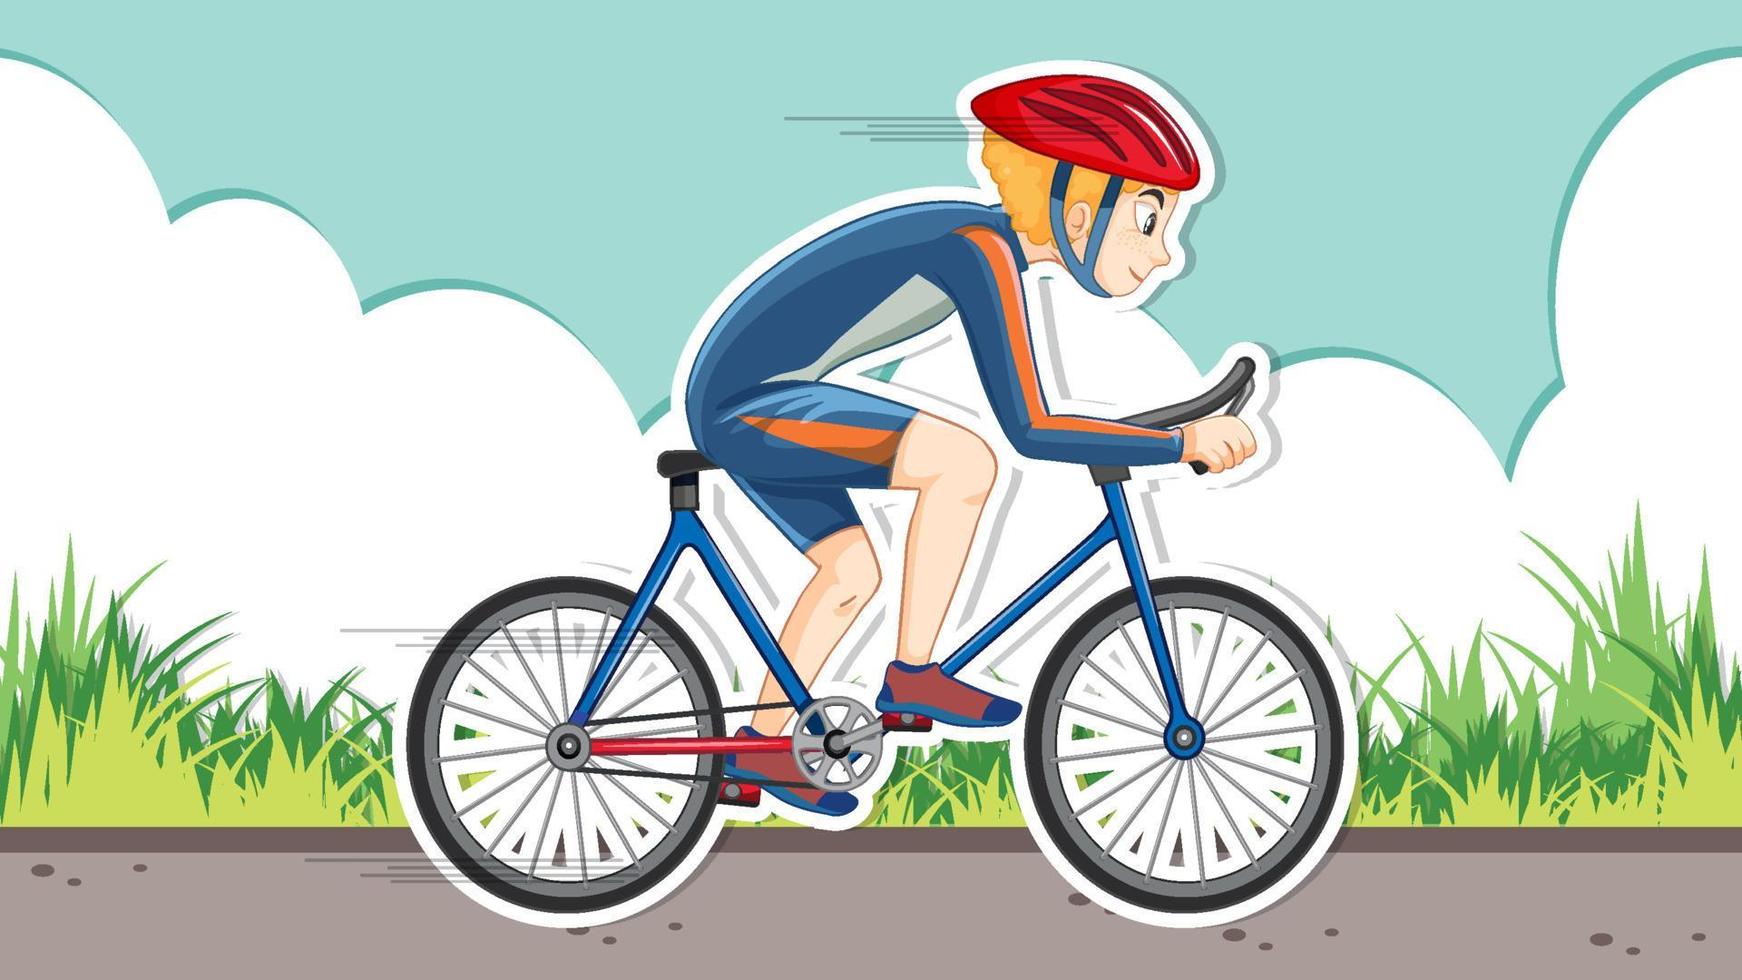 diseño en miniatura con ciclista en bicicleta. vector